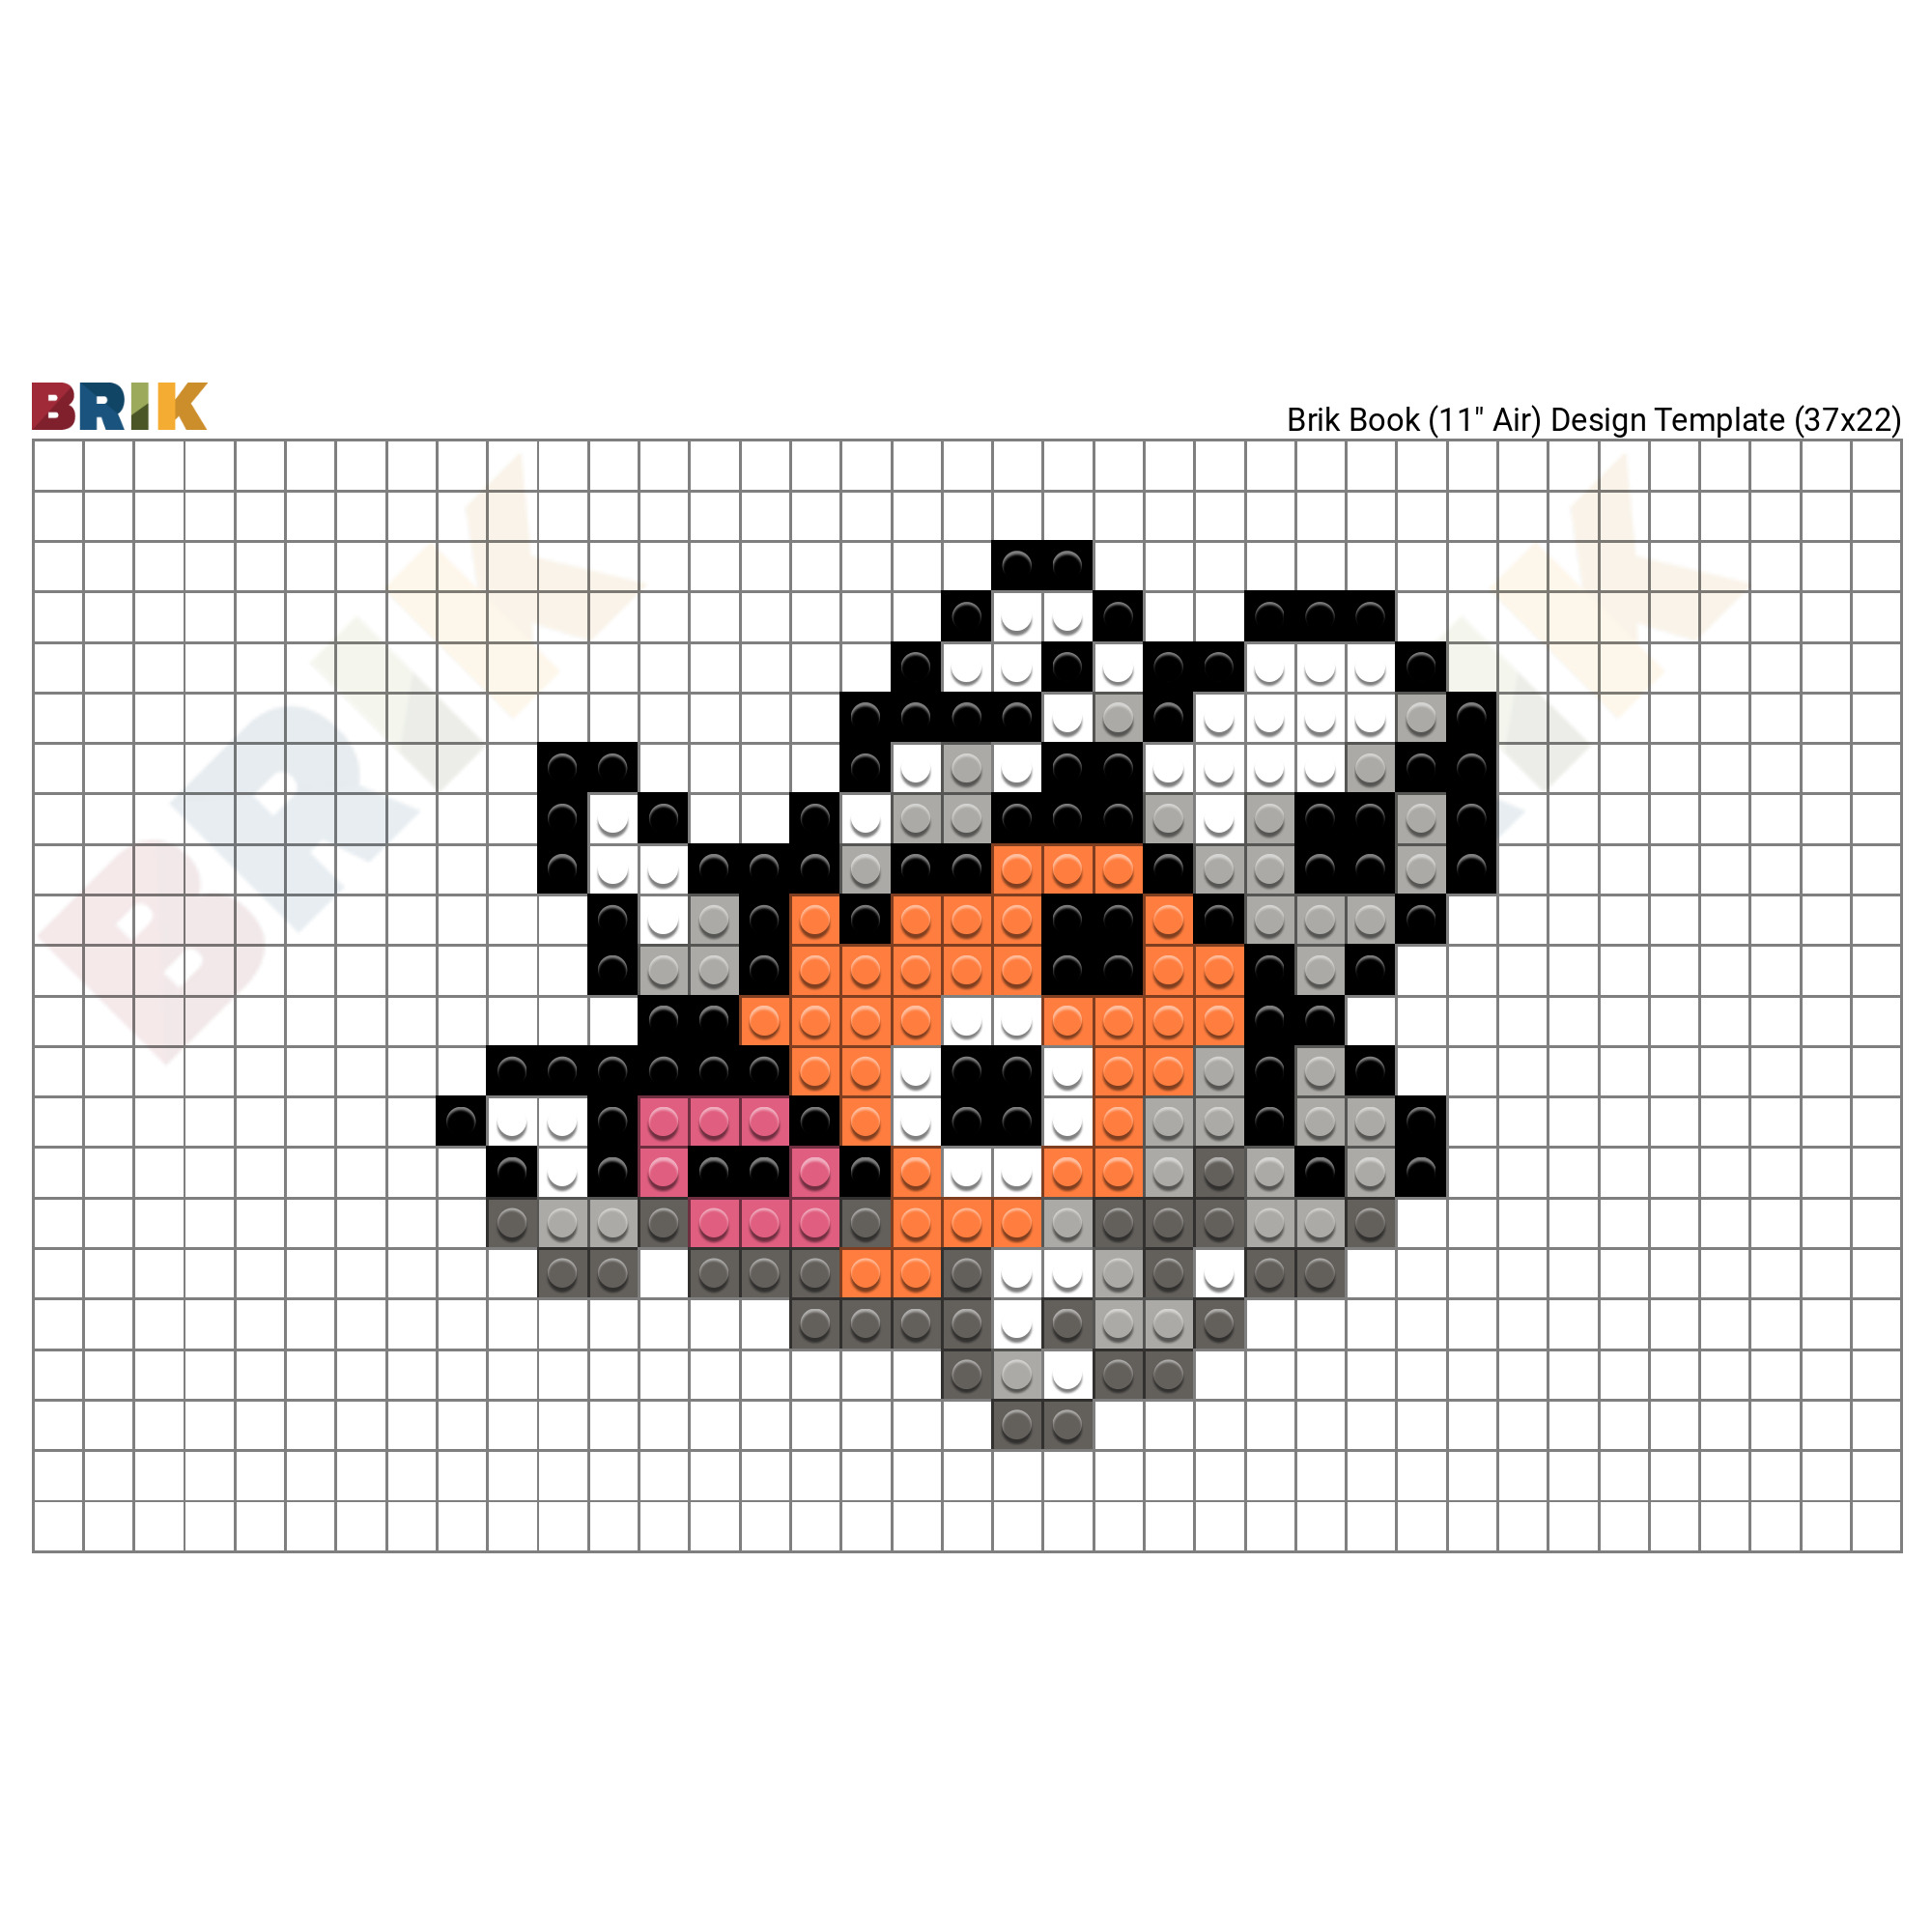 minecraft pixel art templates pokemon sprites